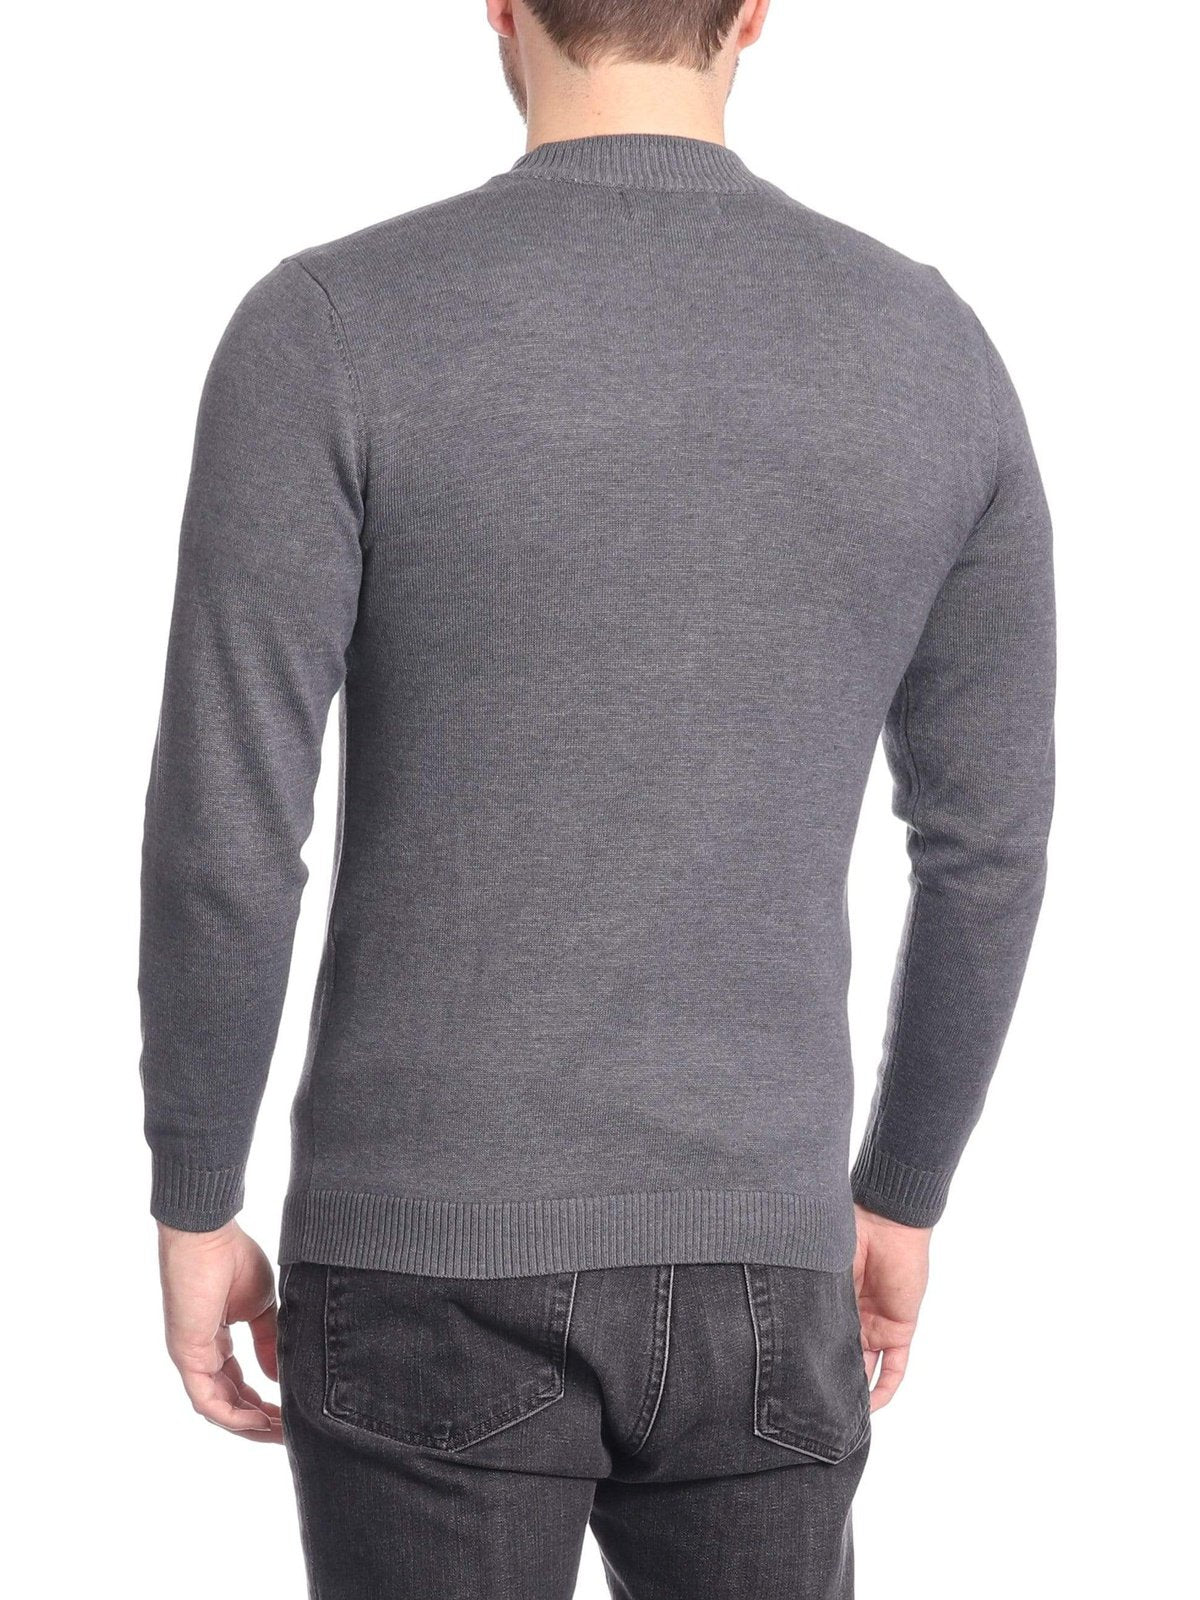 Arthur Black SWEATERS Arthur Black Men’s Charcoal Gray Pullover Cotton Blend Mock Neck Sweater Shirt